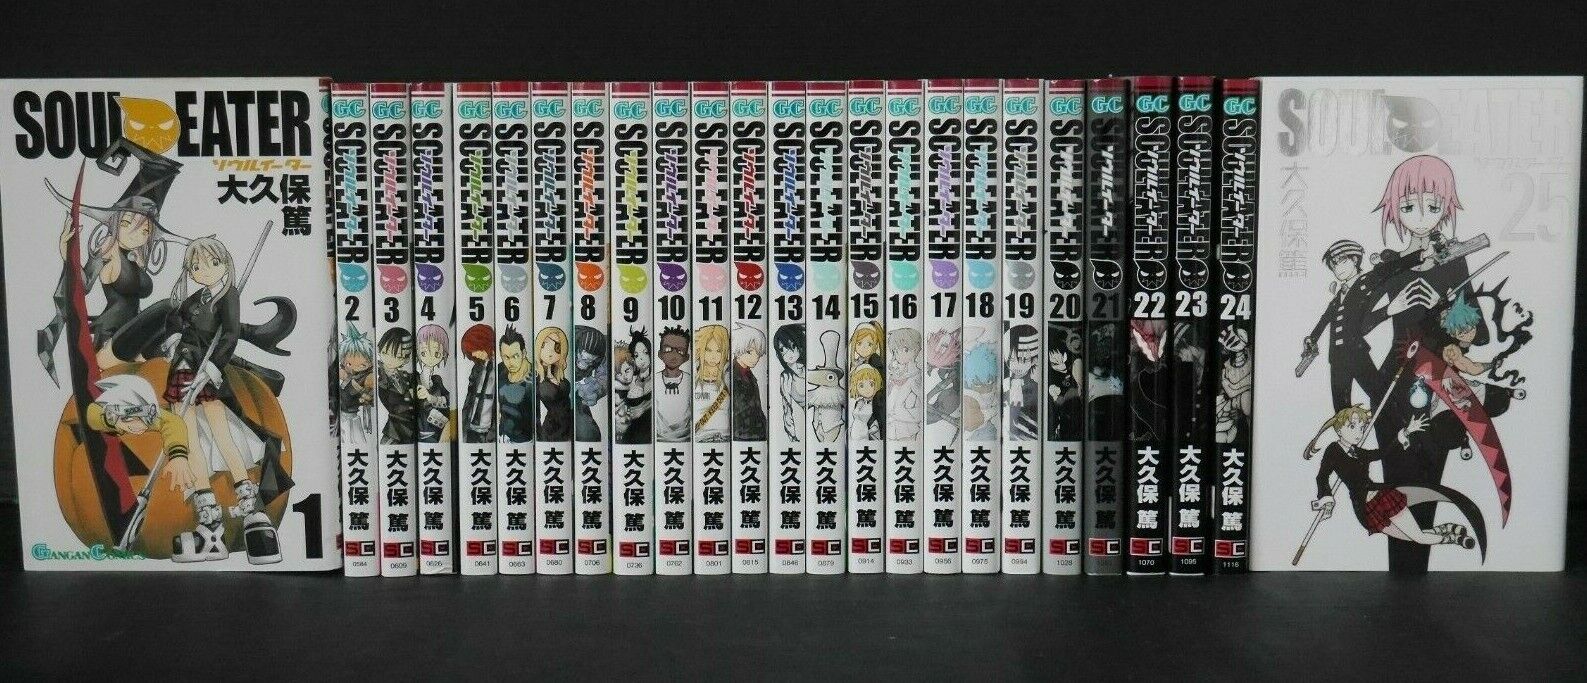 Soul Eater Vol.1-25 Full Manga Set by Atsushi Ohkubo - From Japan